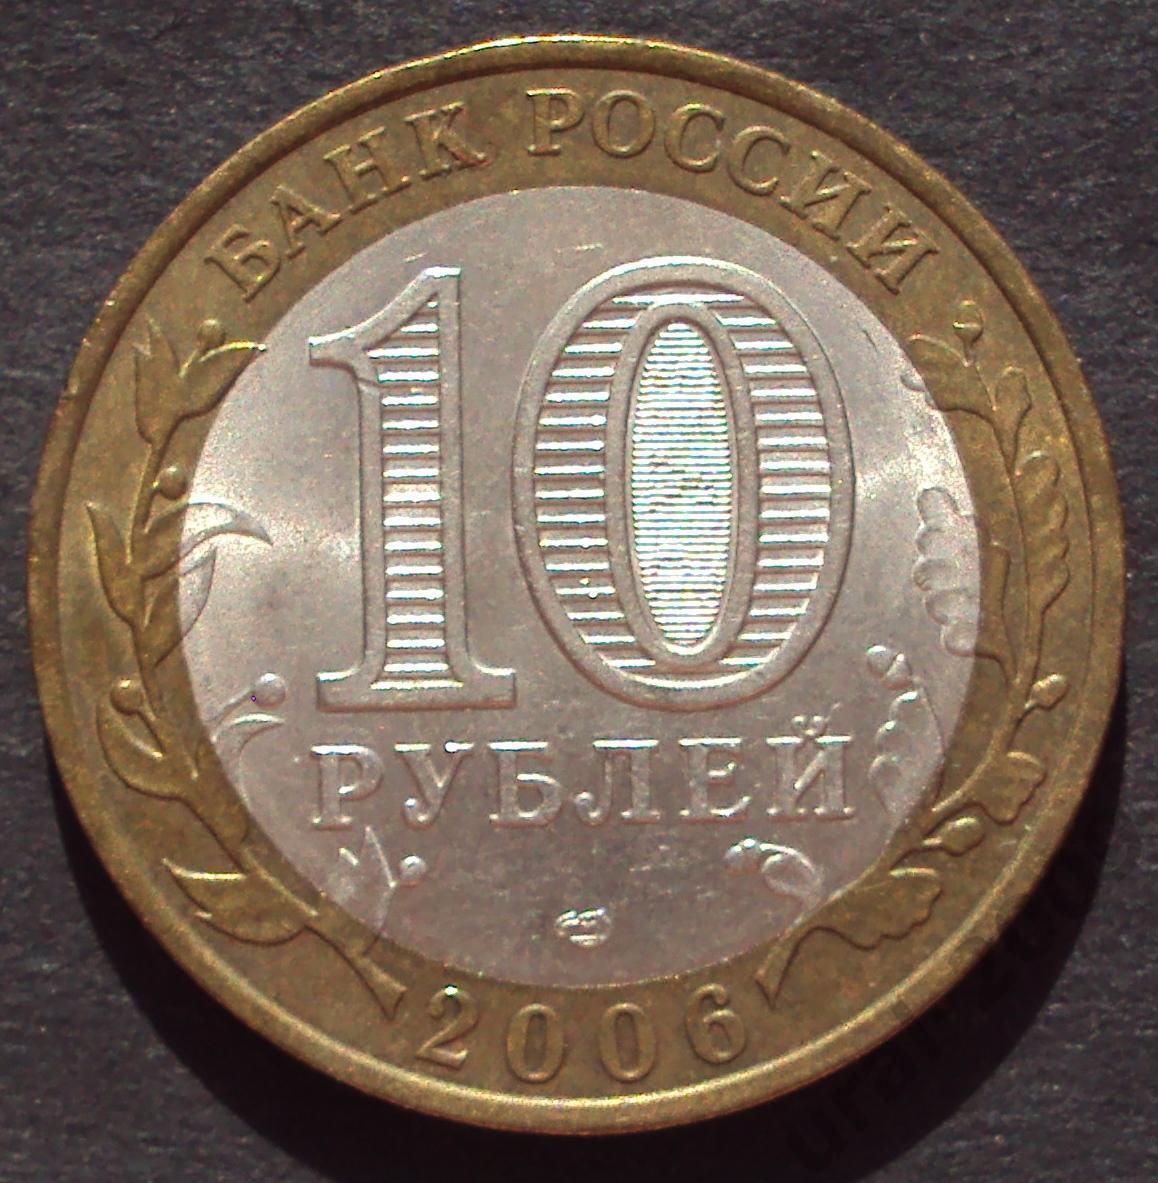 10 рублей 2006 год! Республика Алтай. СПМД. (А-35).